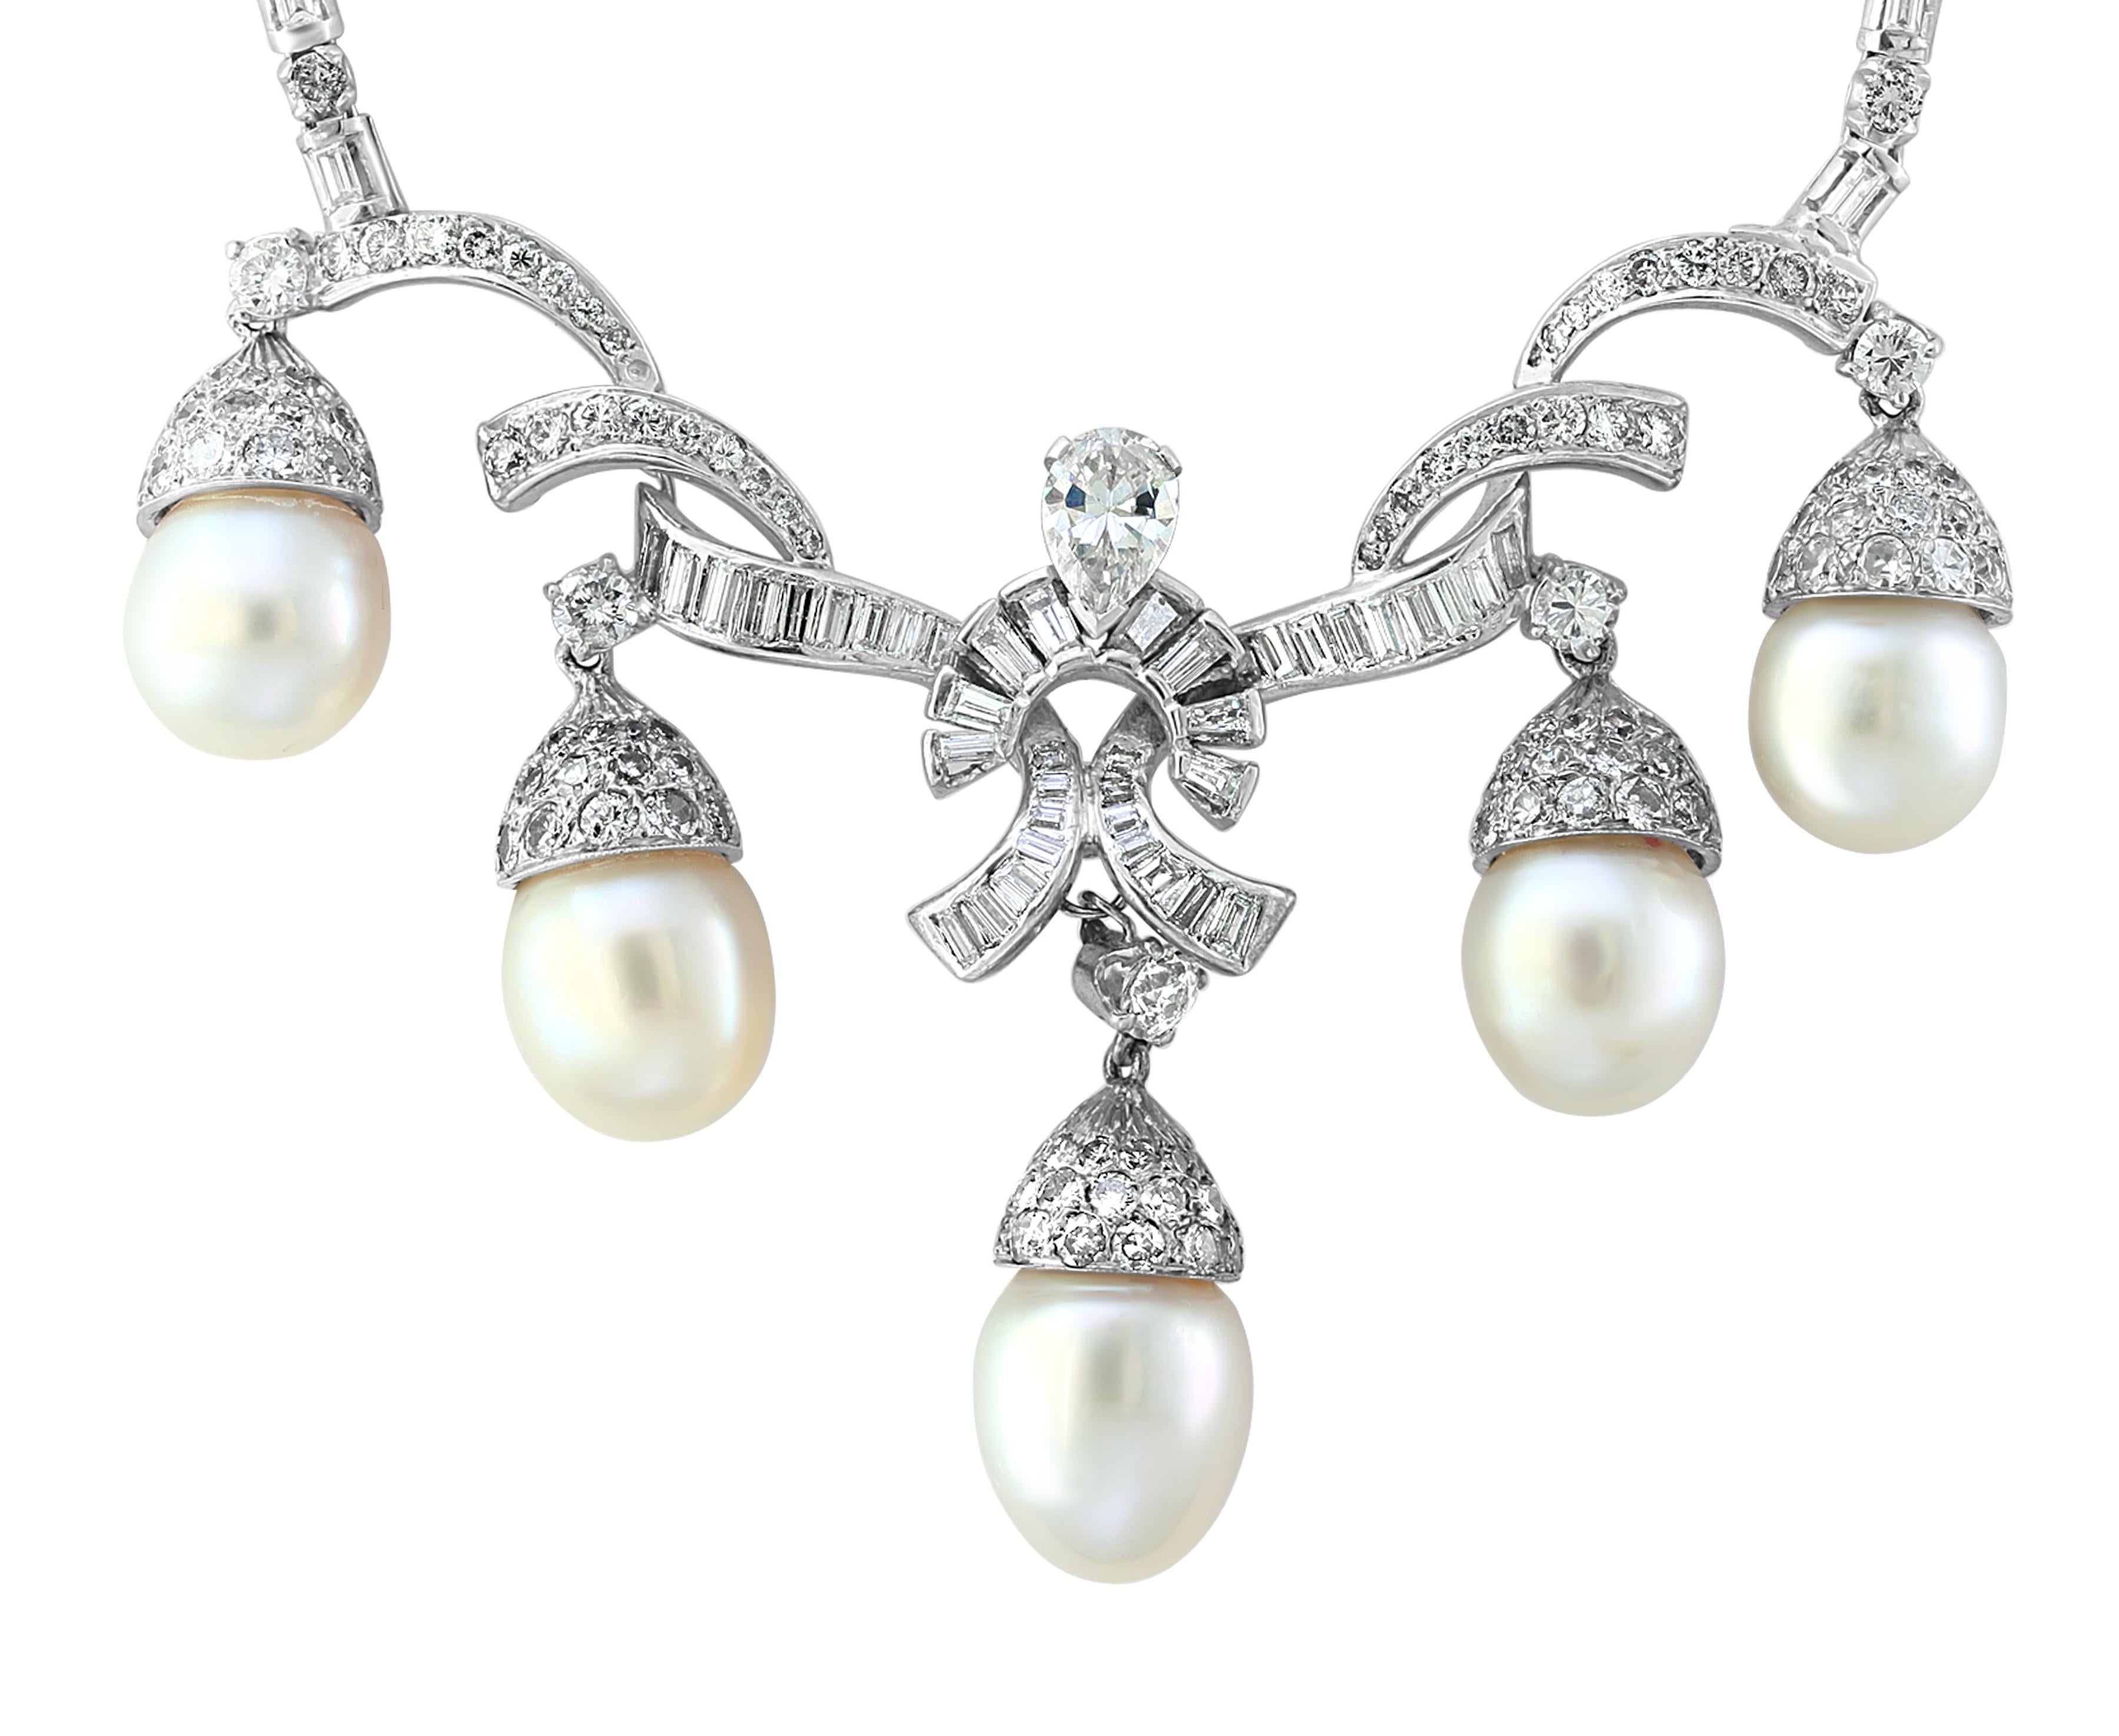 Antique Diamond Pearl Suite in 18 Karat White Gold, Bridal, Estate For Sale 4